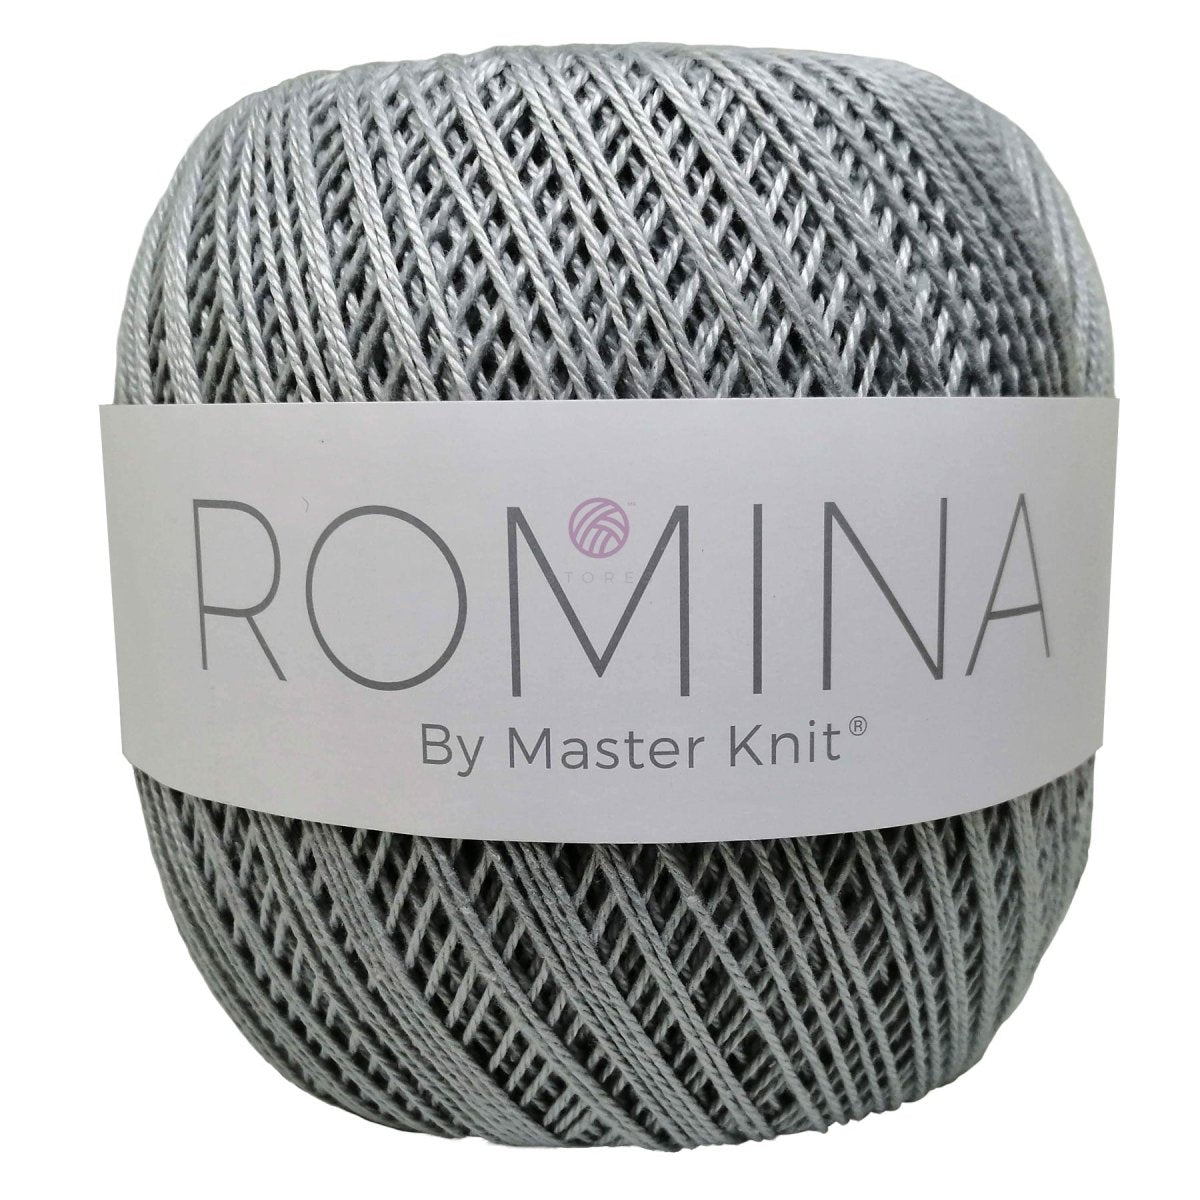 ROMINA - Crochetstores9335-194745051438548